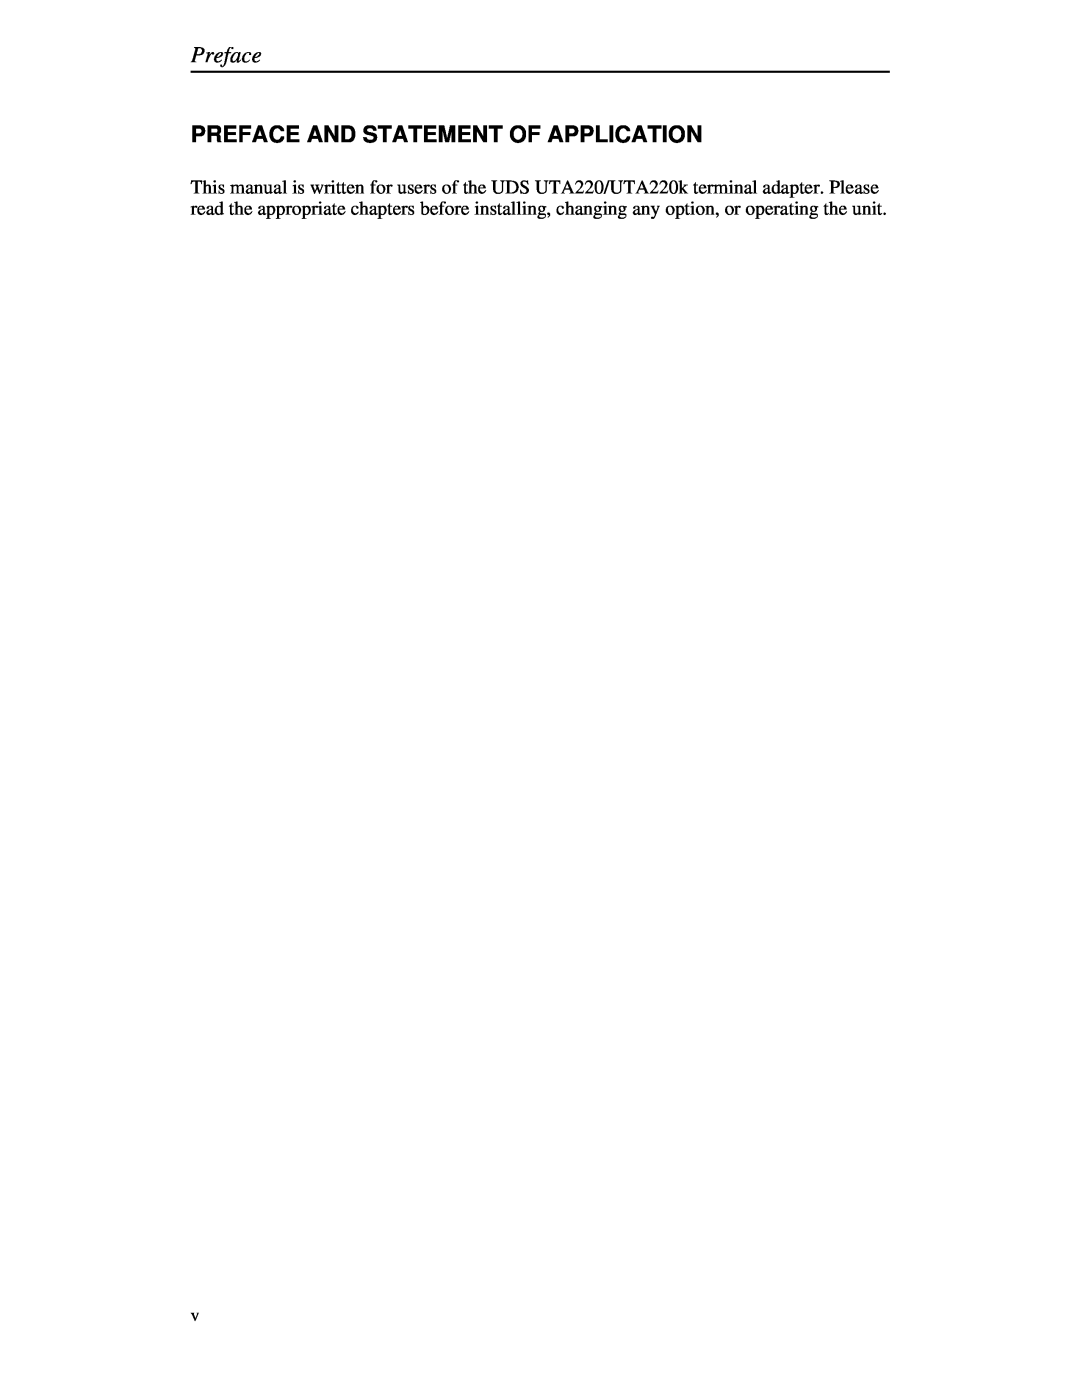 Northern UTA220/UTA220k manual Preface And Statement Of Application 